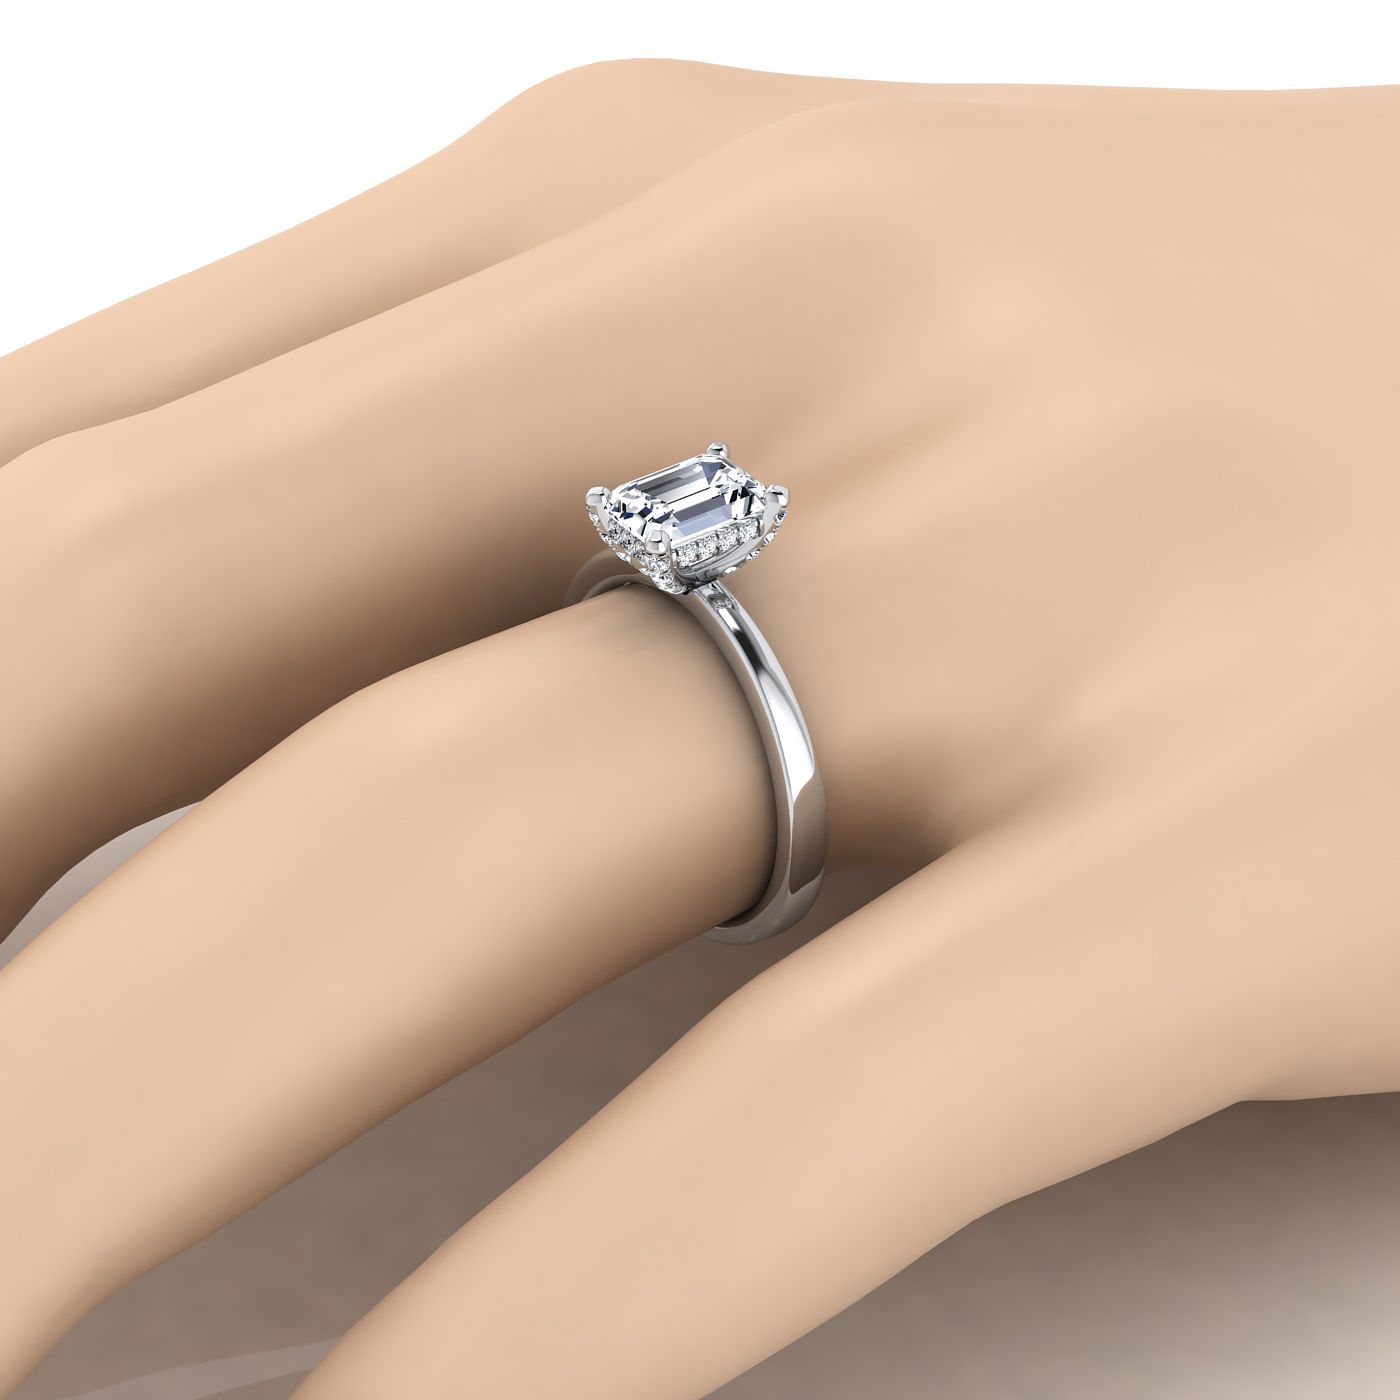 Was my diamond set too high??? | Weddings, Etiquette and Advice | Wedding  Forums | WeddingWire